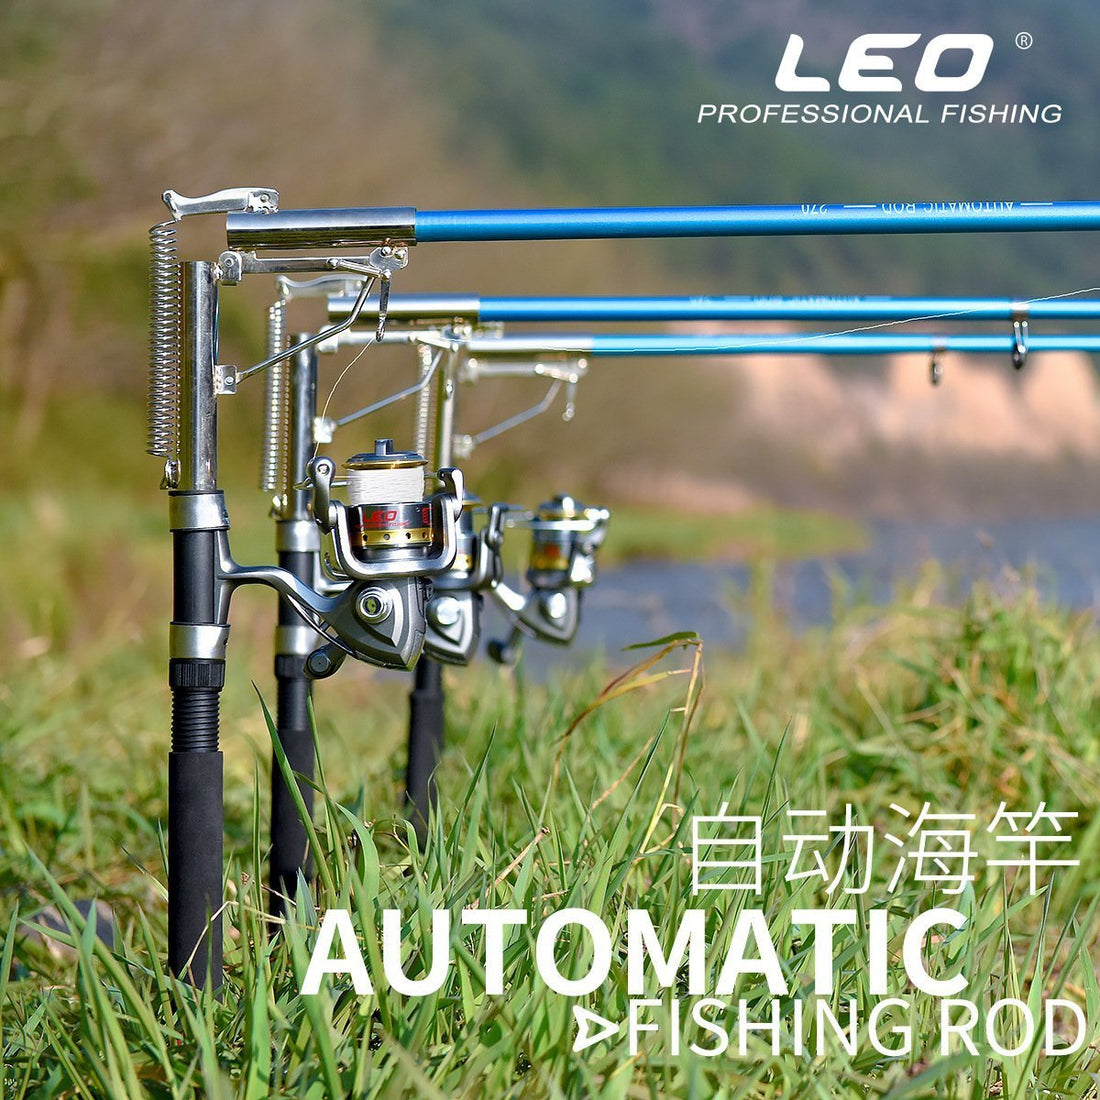 1Pcs Automatic Fishing Rod Sea River Lake Stainless Steel Fishing Rod Fishing-Automatic Fishing Rods-China Fishing knight Store-1.8 m-Bargain Bait Box